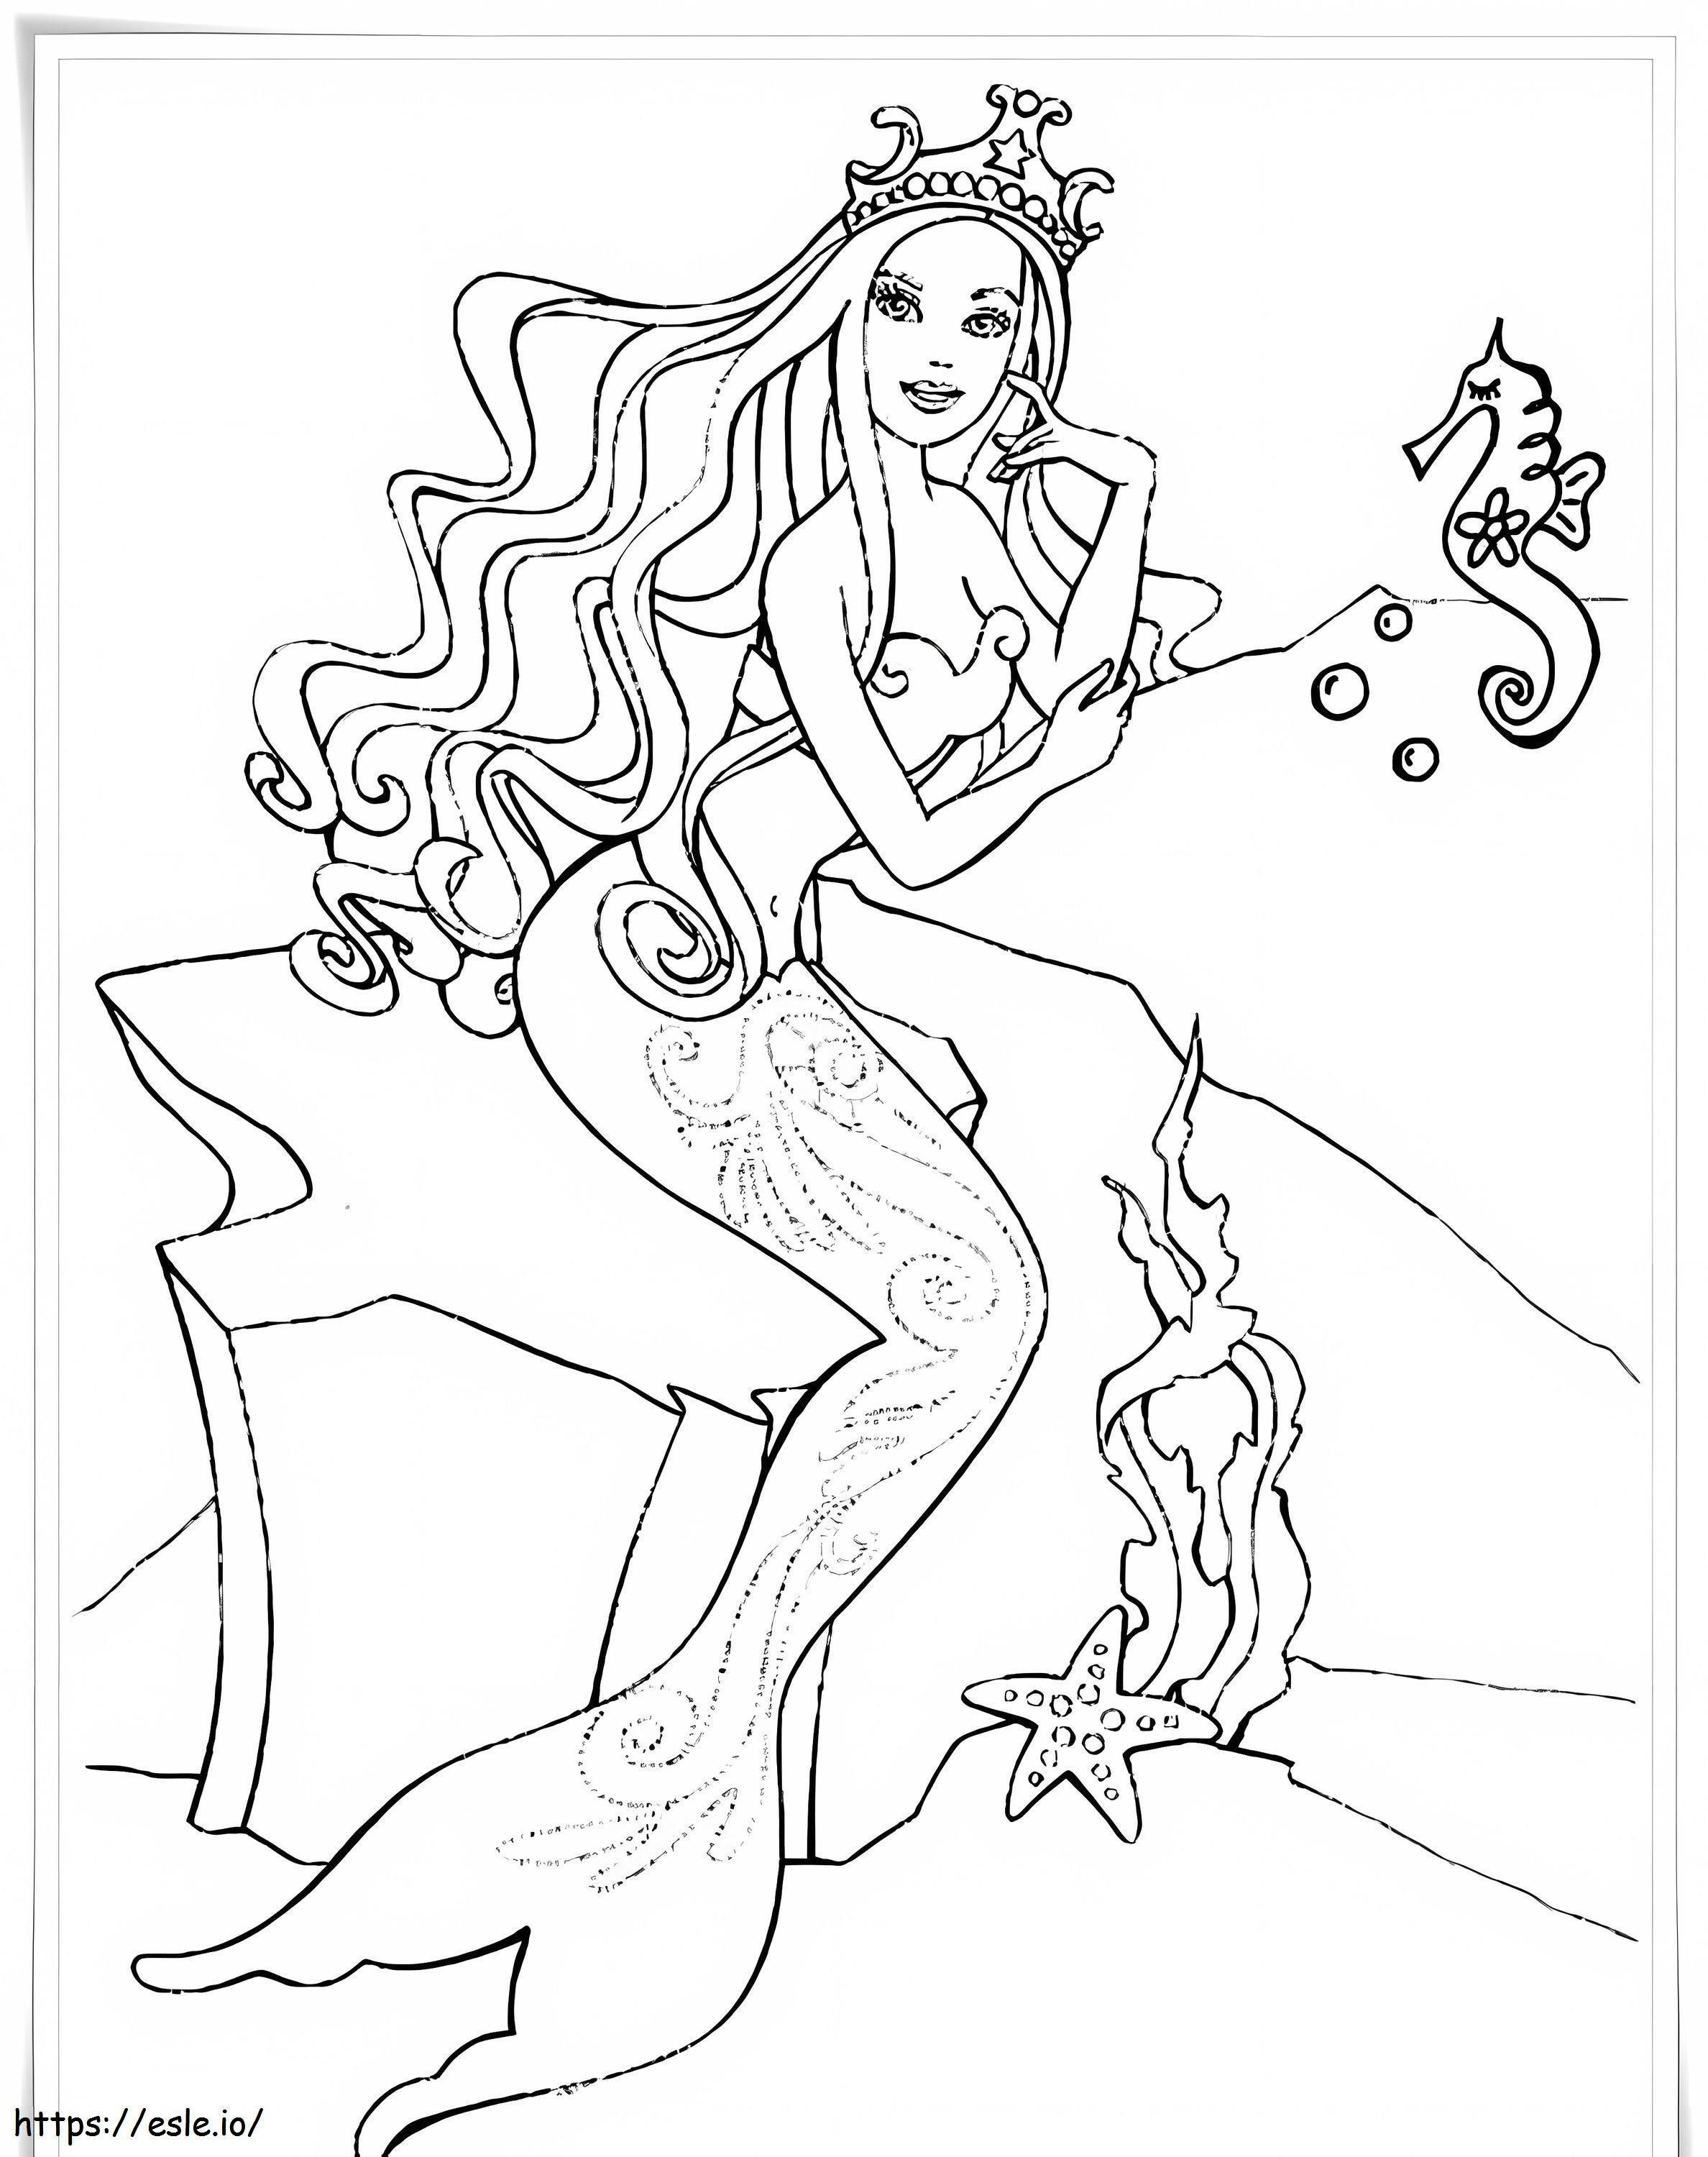 Coloriage Barbie Sirène 8 811X1024 à imprimer dessin